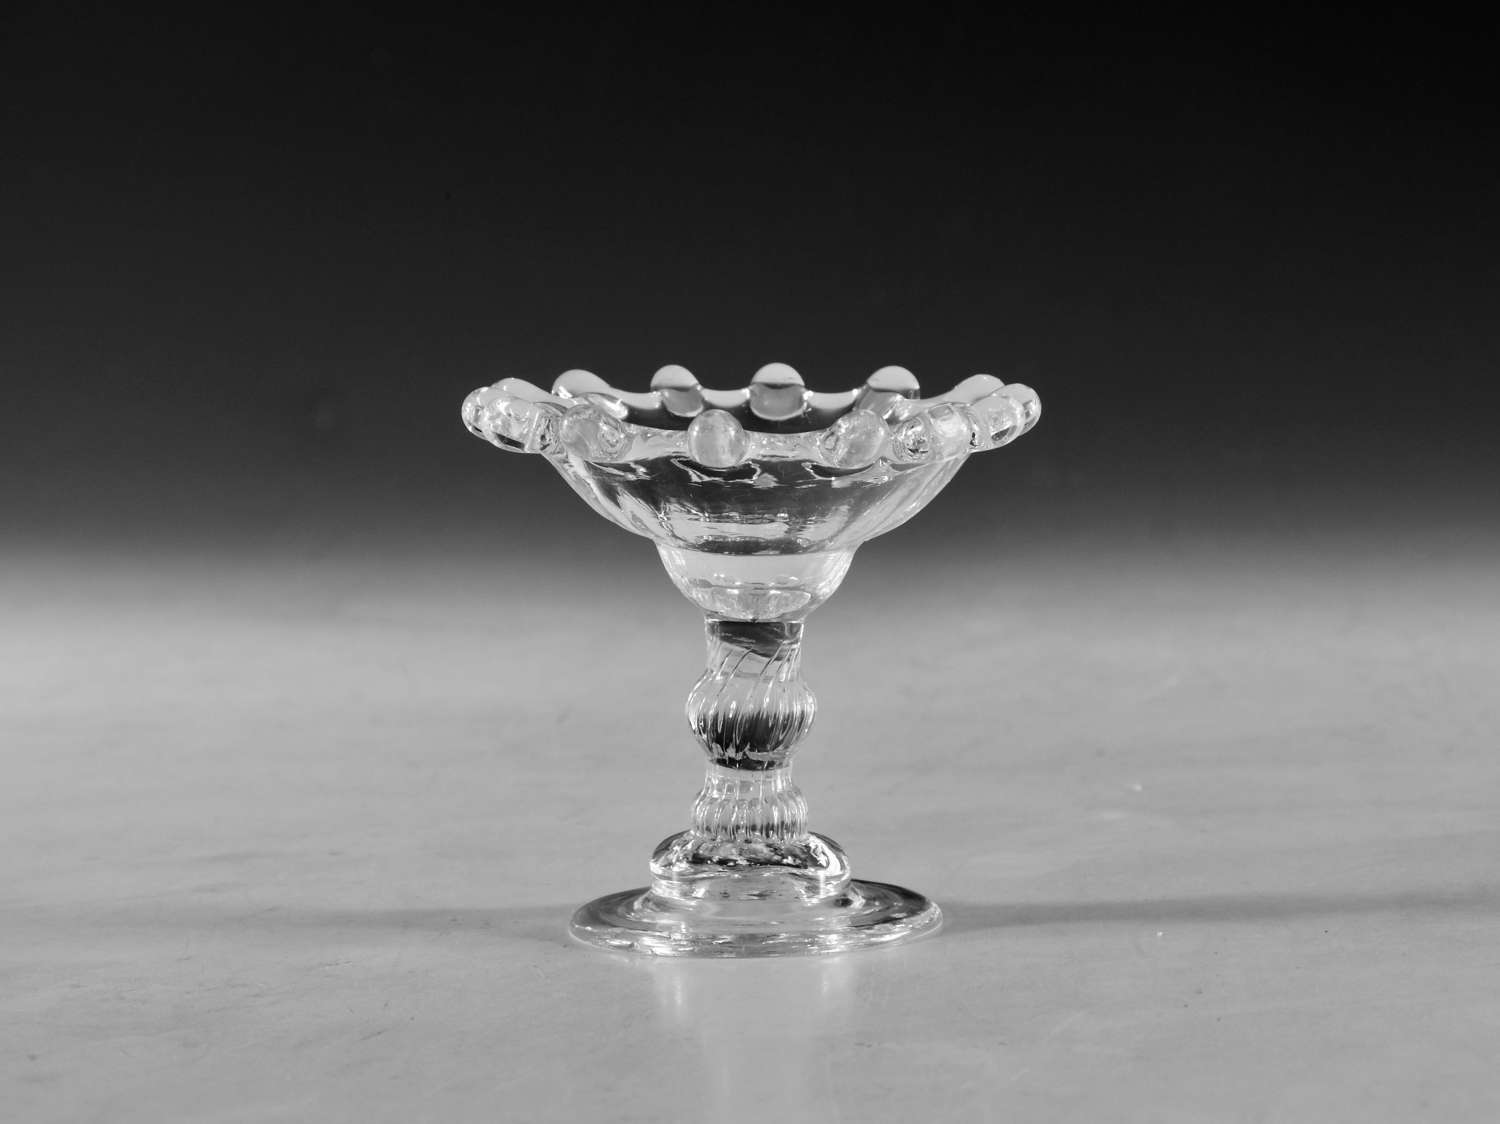 Antique glass sweetmeat glass English c1750